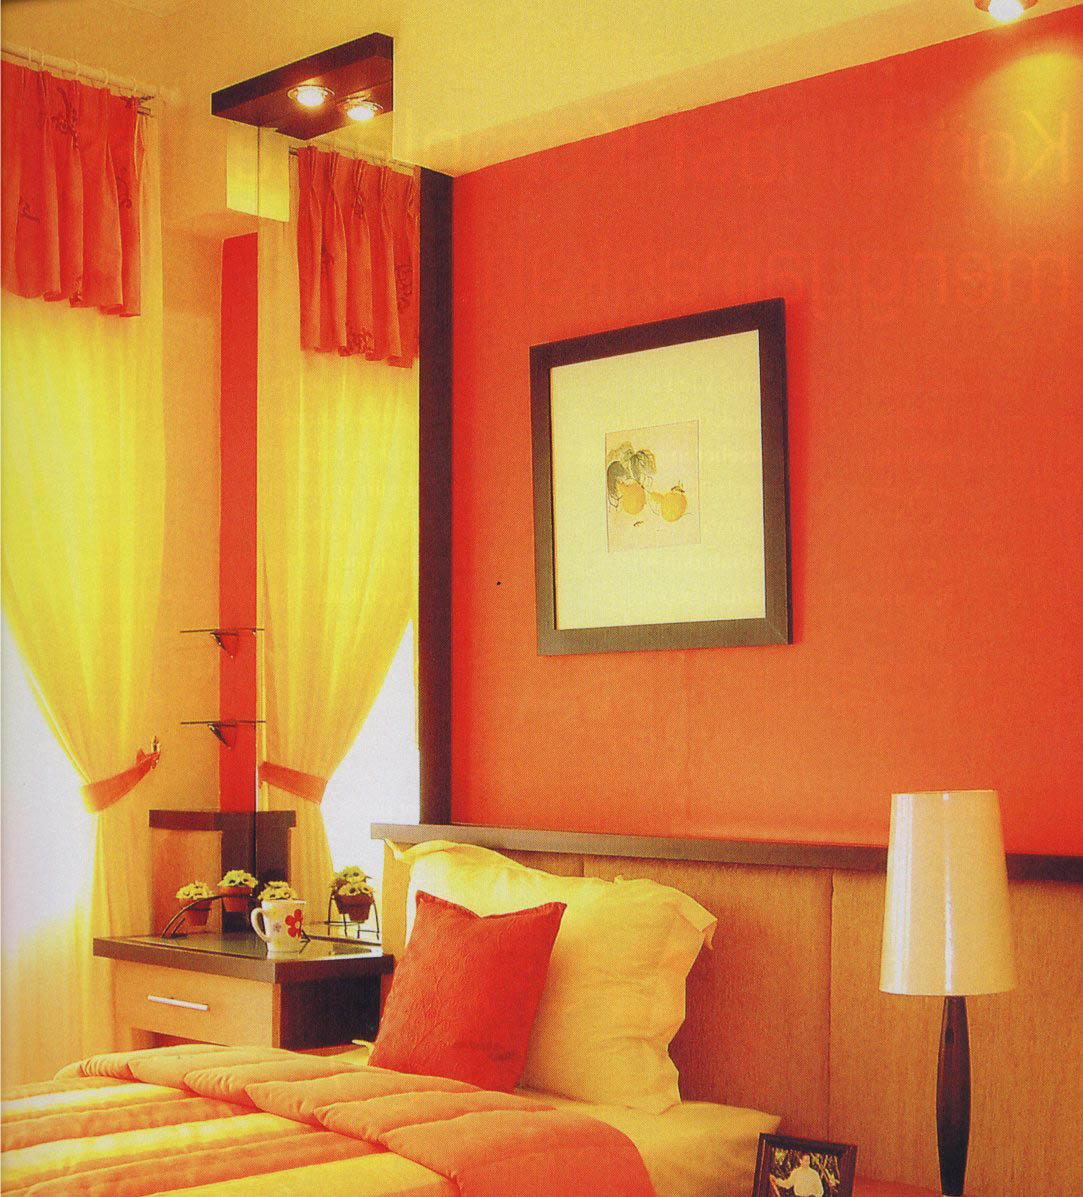  Bedroom  Painting Ideas Popular Interior House Ideas